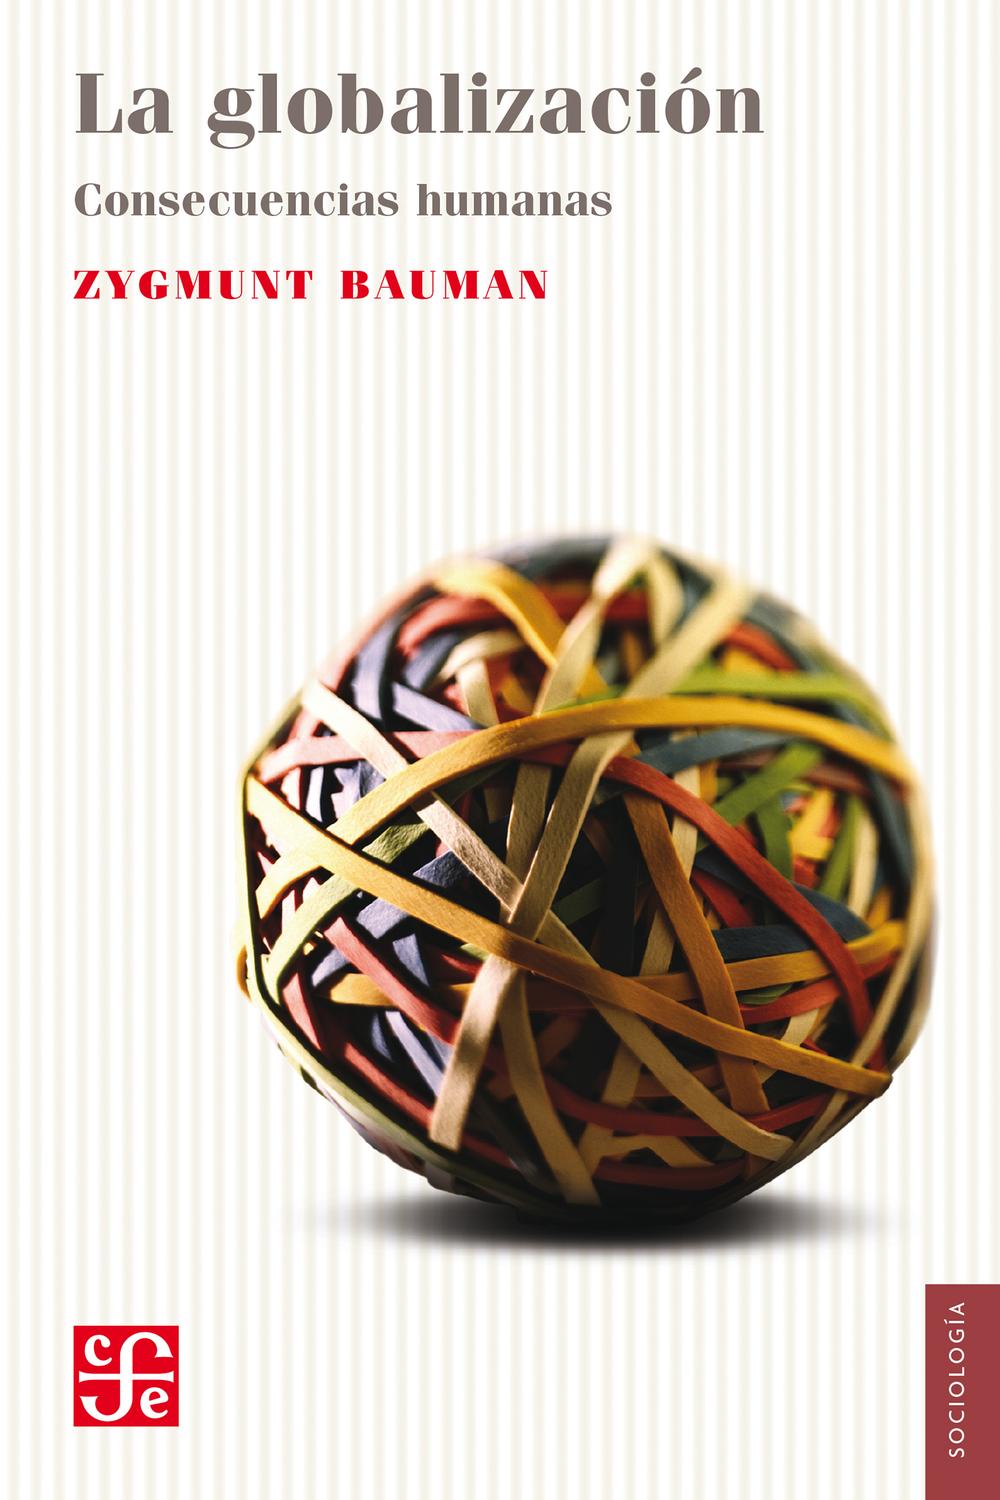 La globalización - Zygmunt Bauman, Daniel Zadunaisky